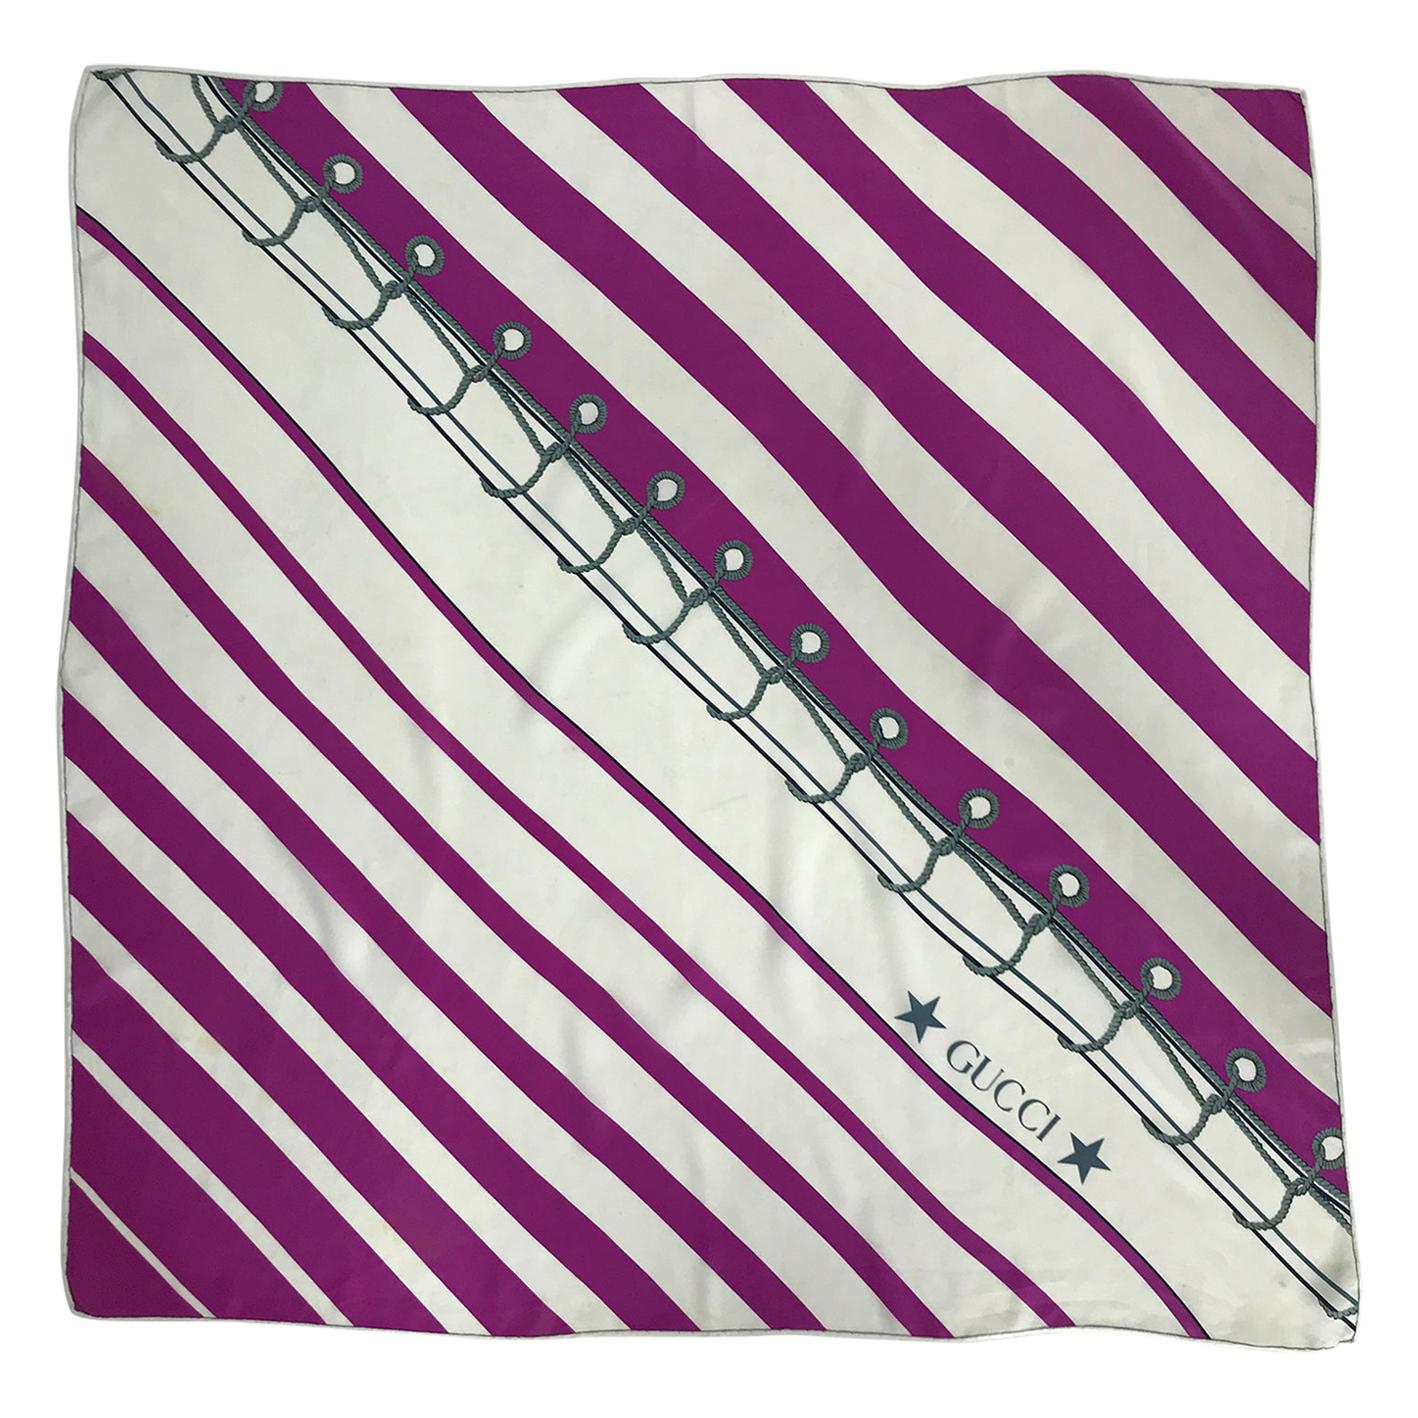 Gucci Silk Crepe Scarf With Diagonal Nautical Print 34 x 34